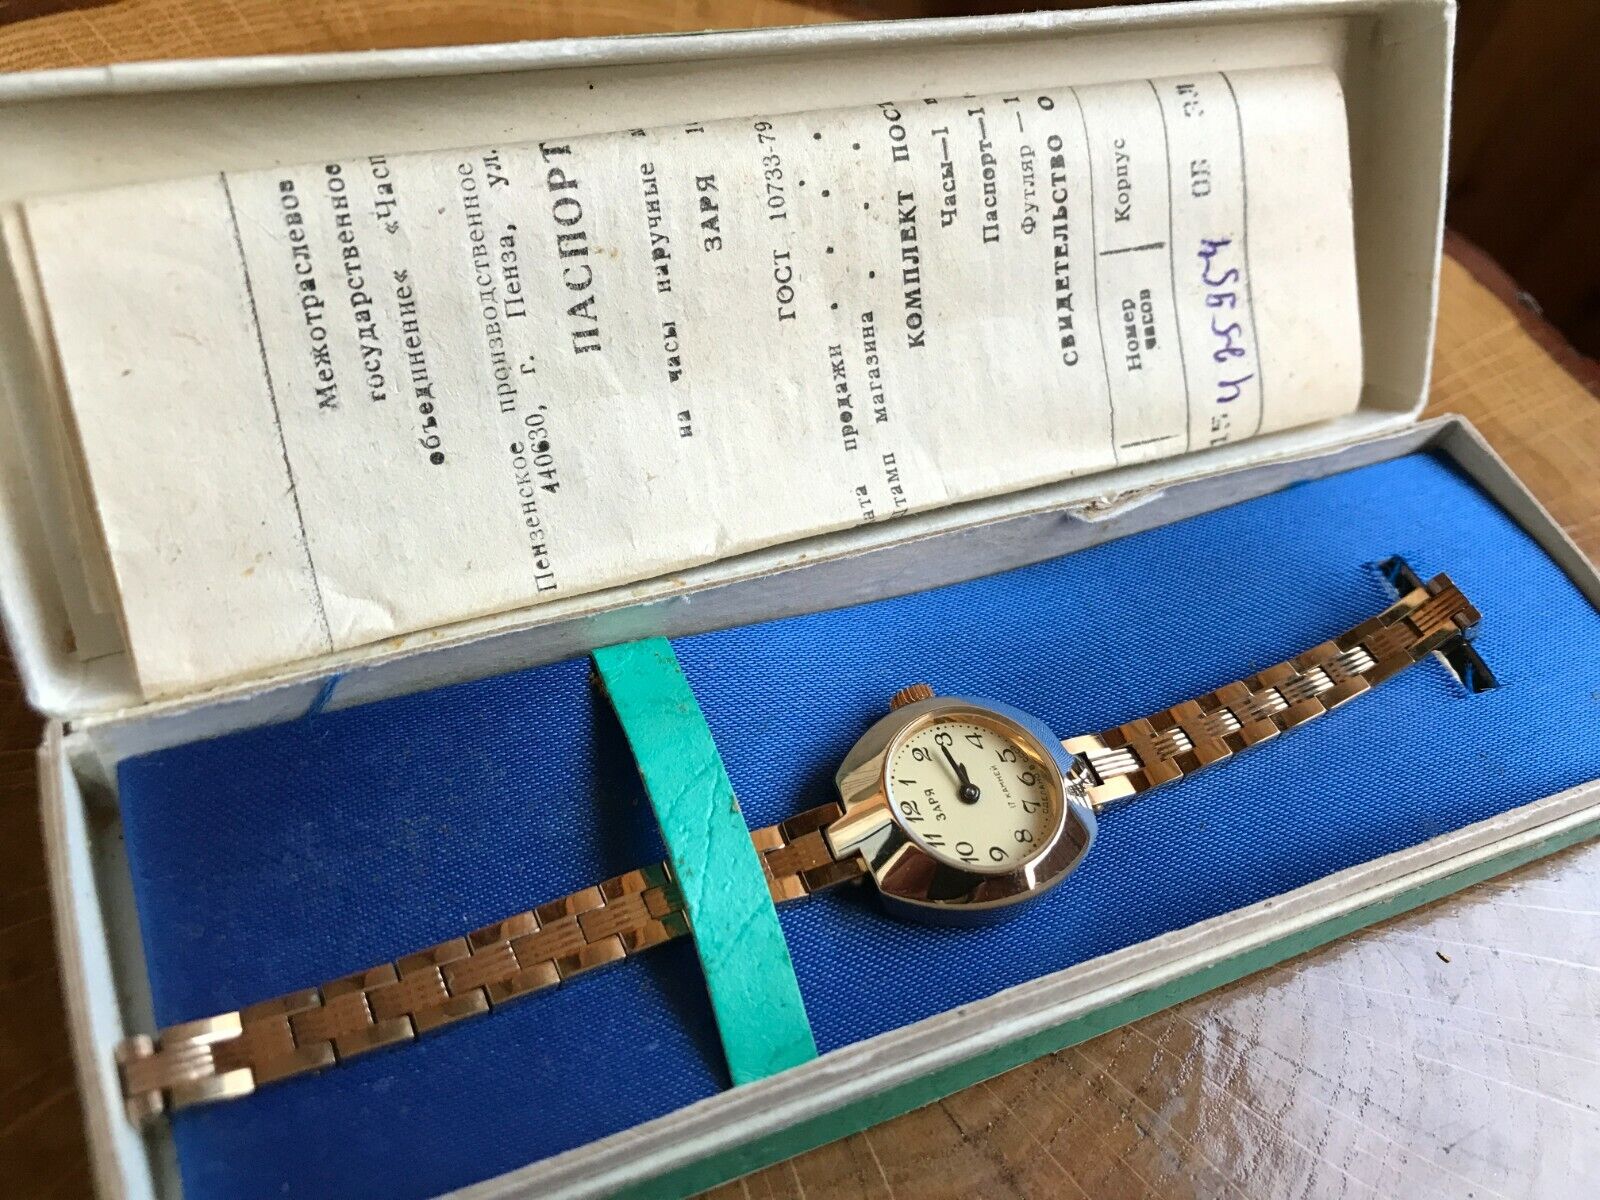 NOS Women's mechanical watches SU ZARYA ZARIA ЗАРЯ Gold-plated AU1 USSR